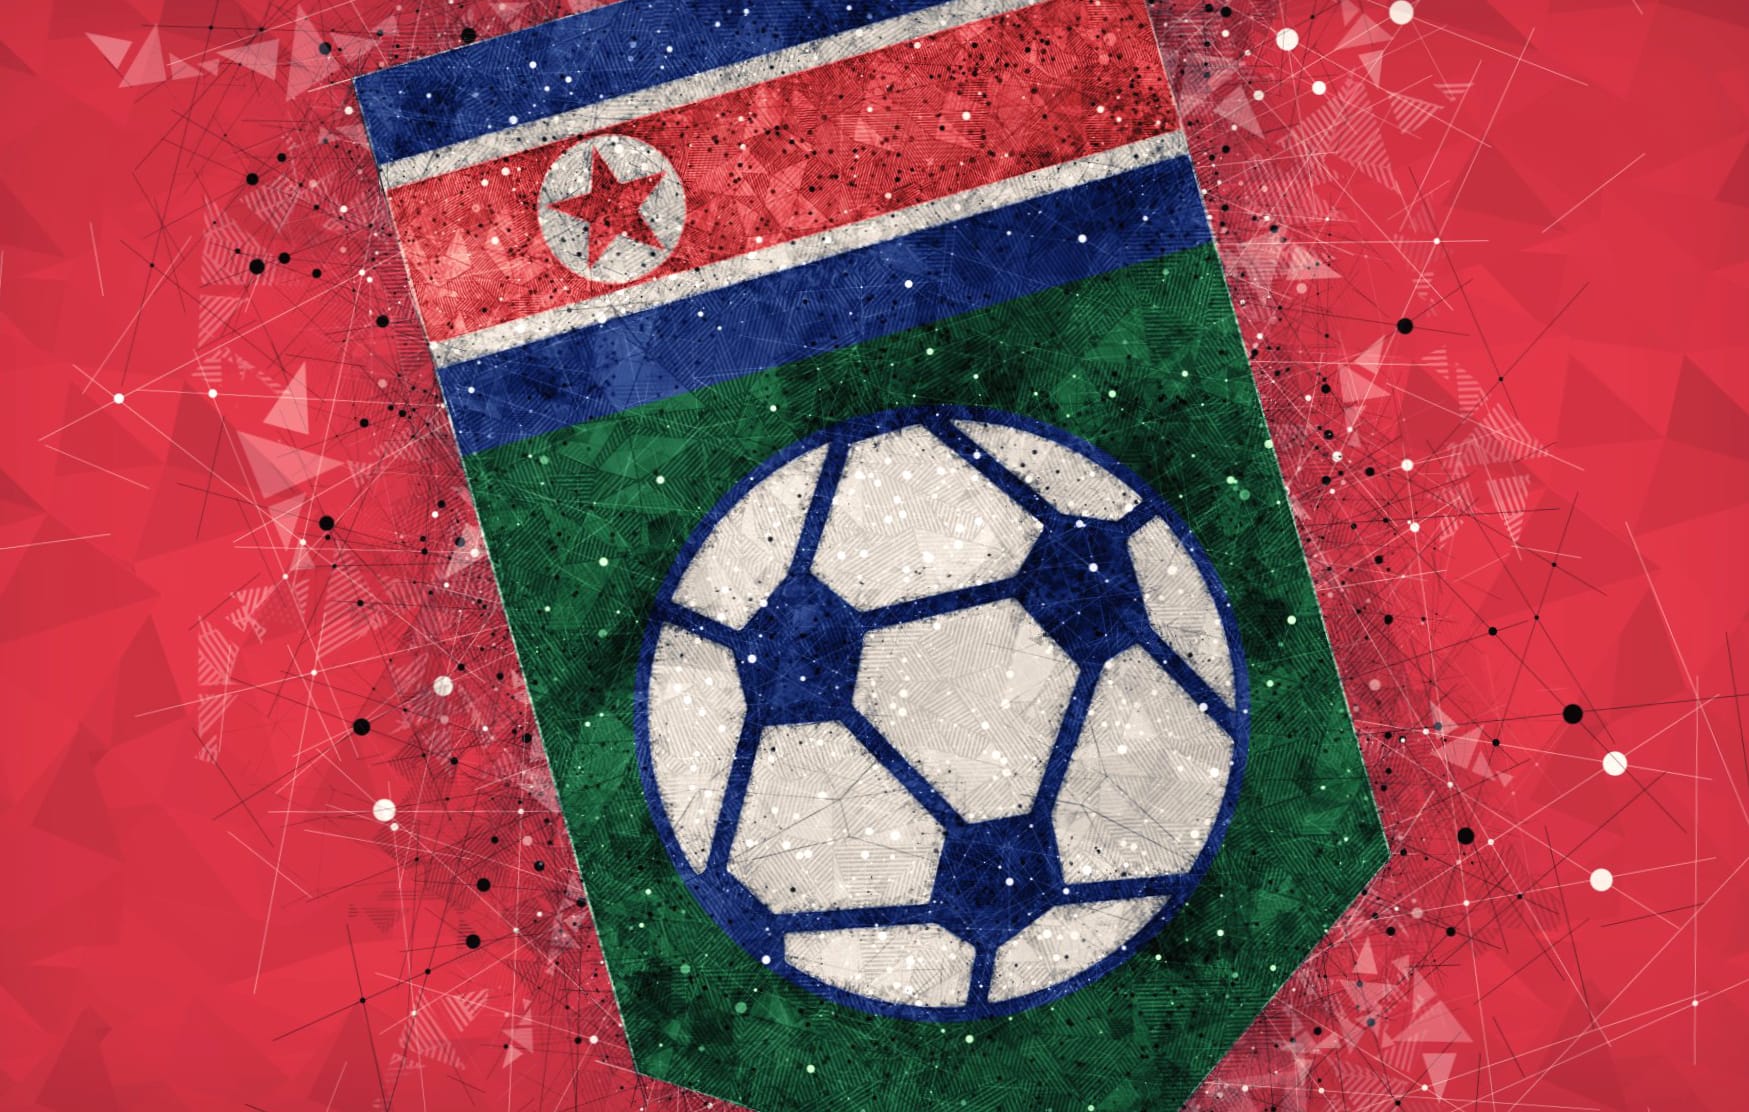 North Korea National Football Team at 1024 x 1024 iPad size wallpapers HD quality